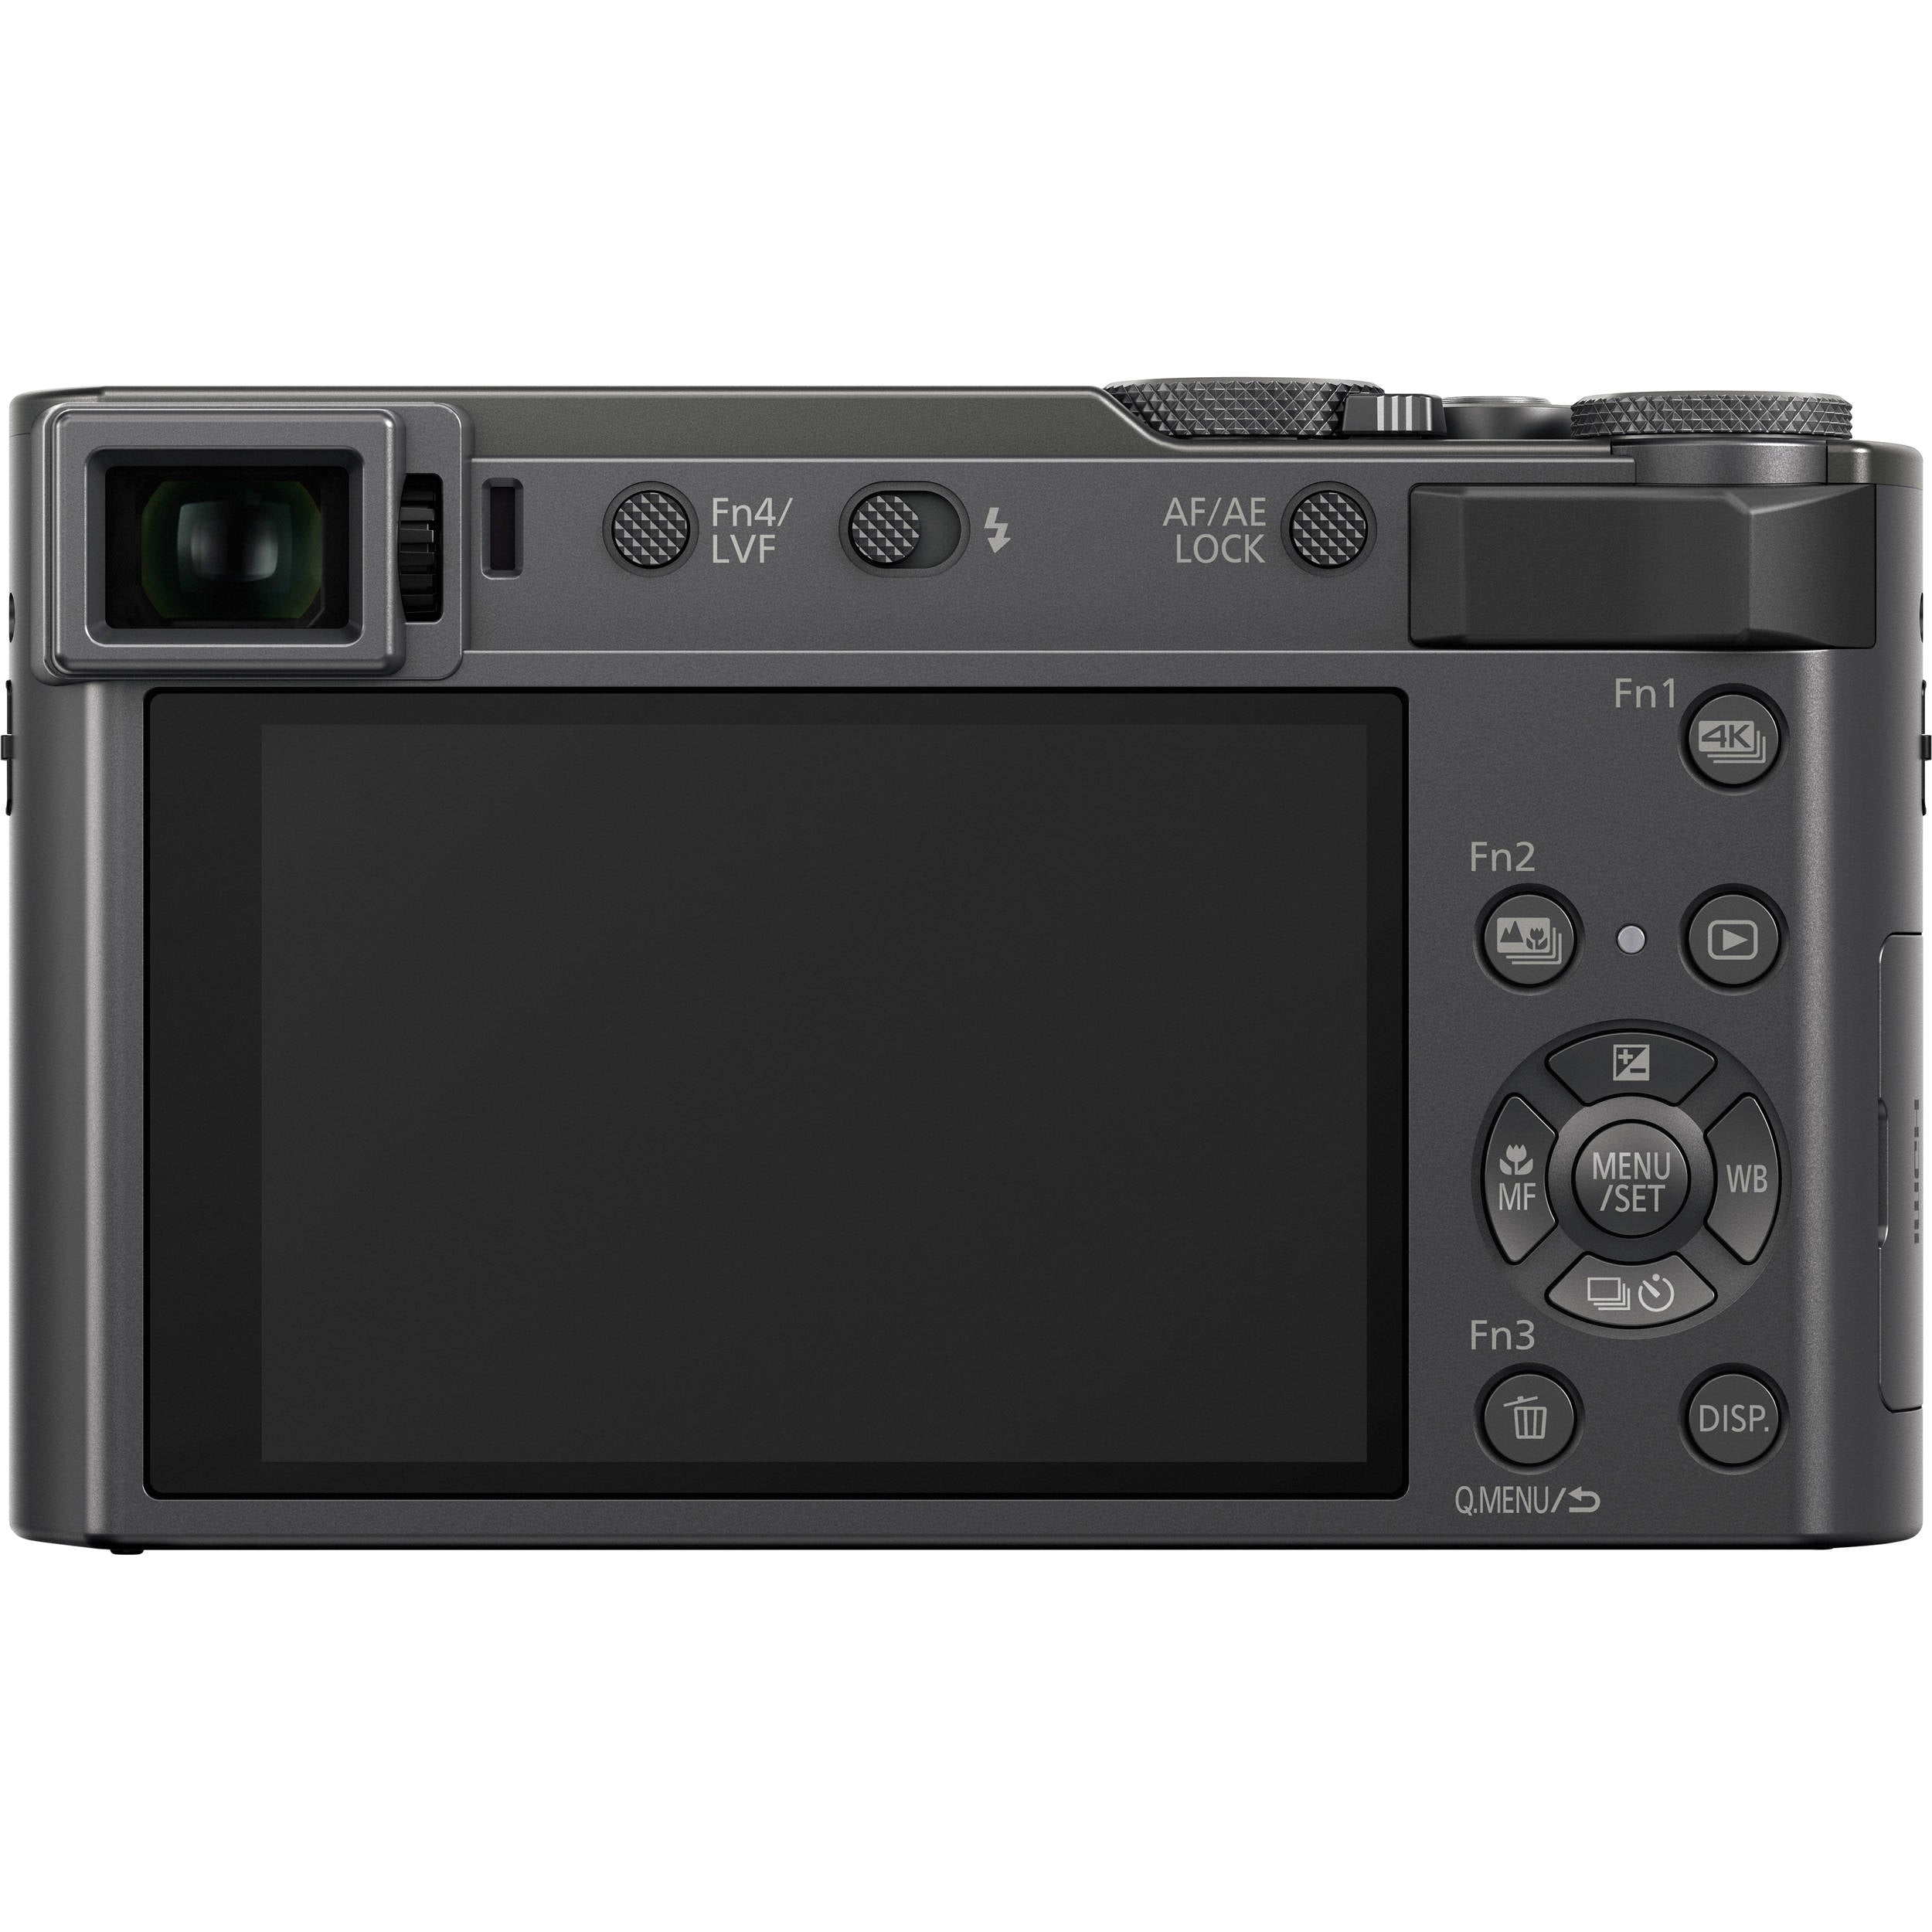 Panasonic Lumix TZ220 Compact Digital Camera - Silver Panasonic